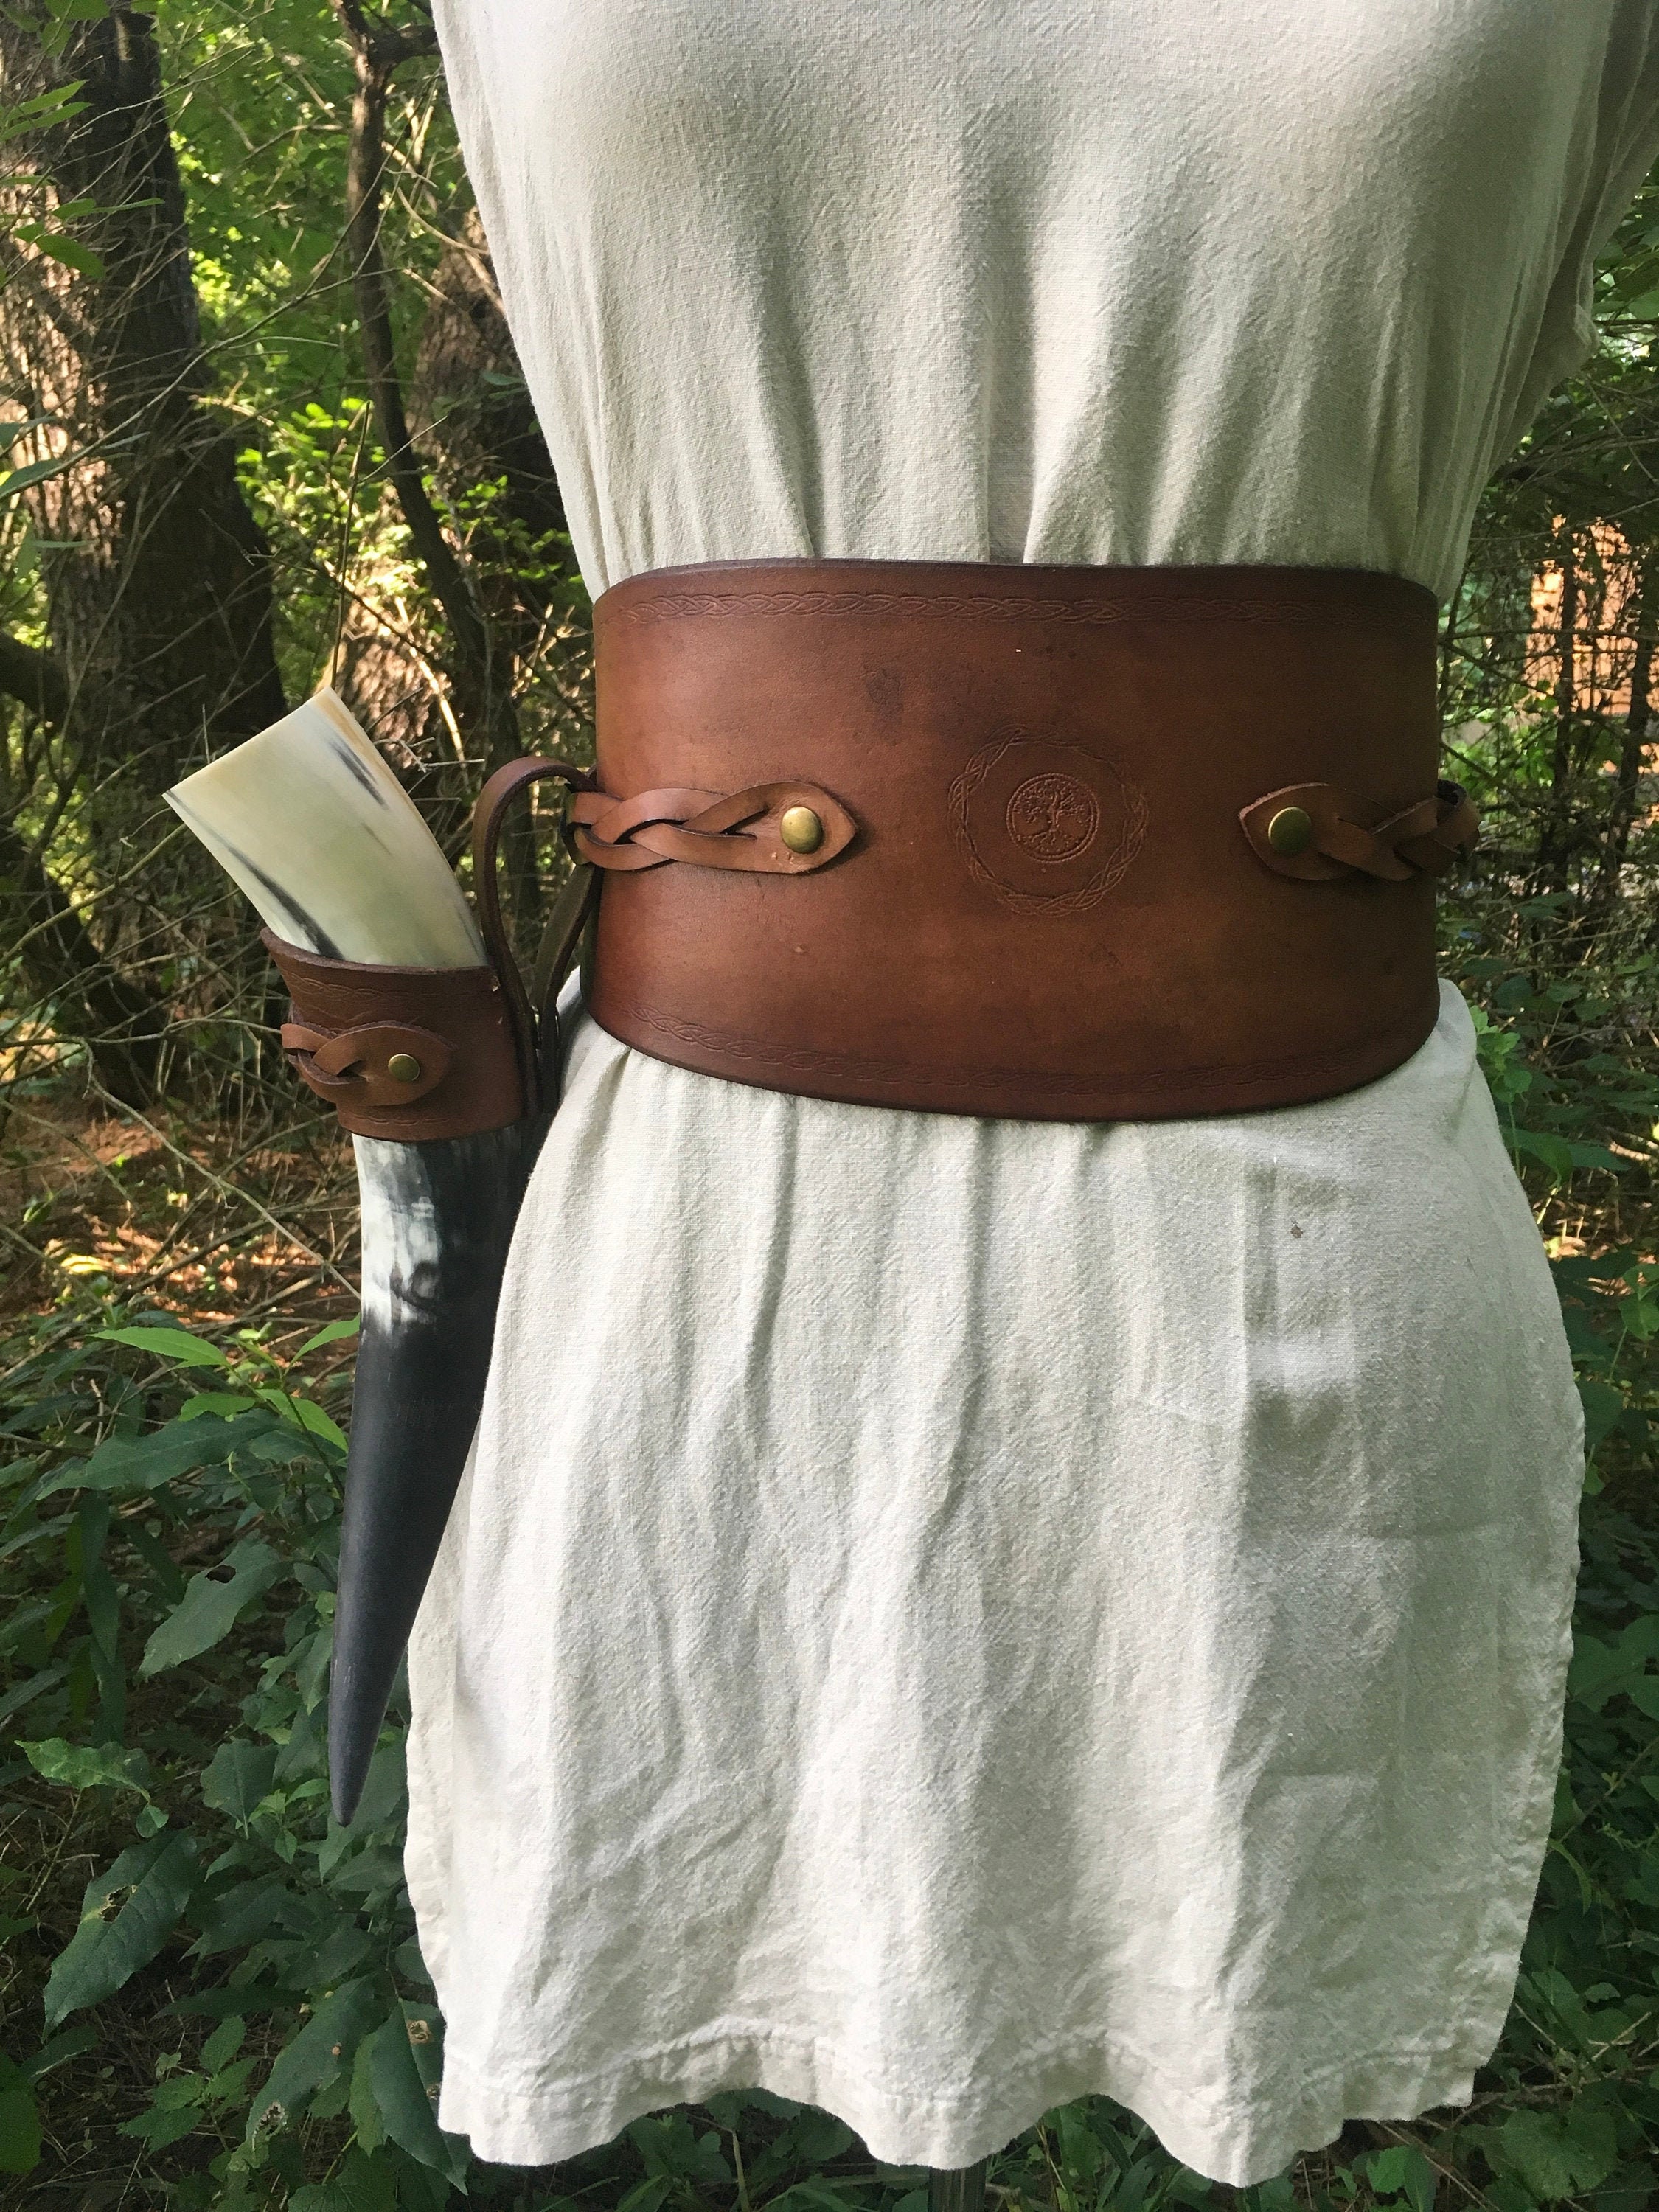 Wingni - Genuine Leather Waist Cincher Belt